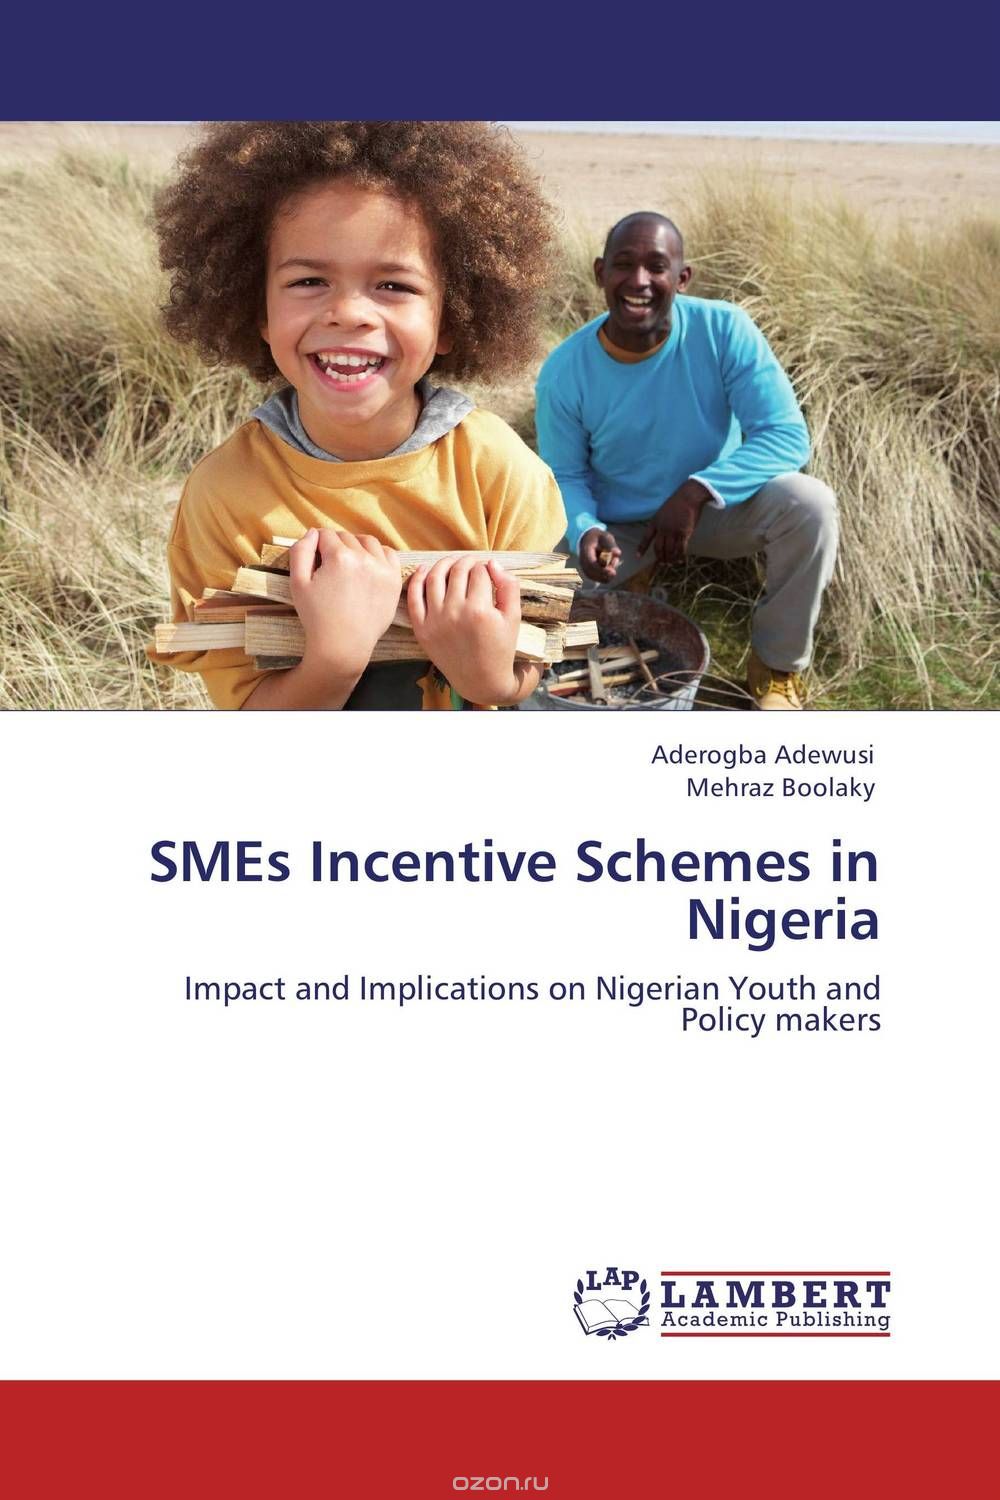 Скачать книгу "SMEs Incentive Schemes in Nigeria"